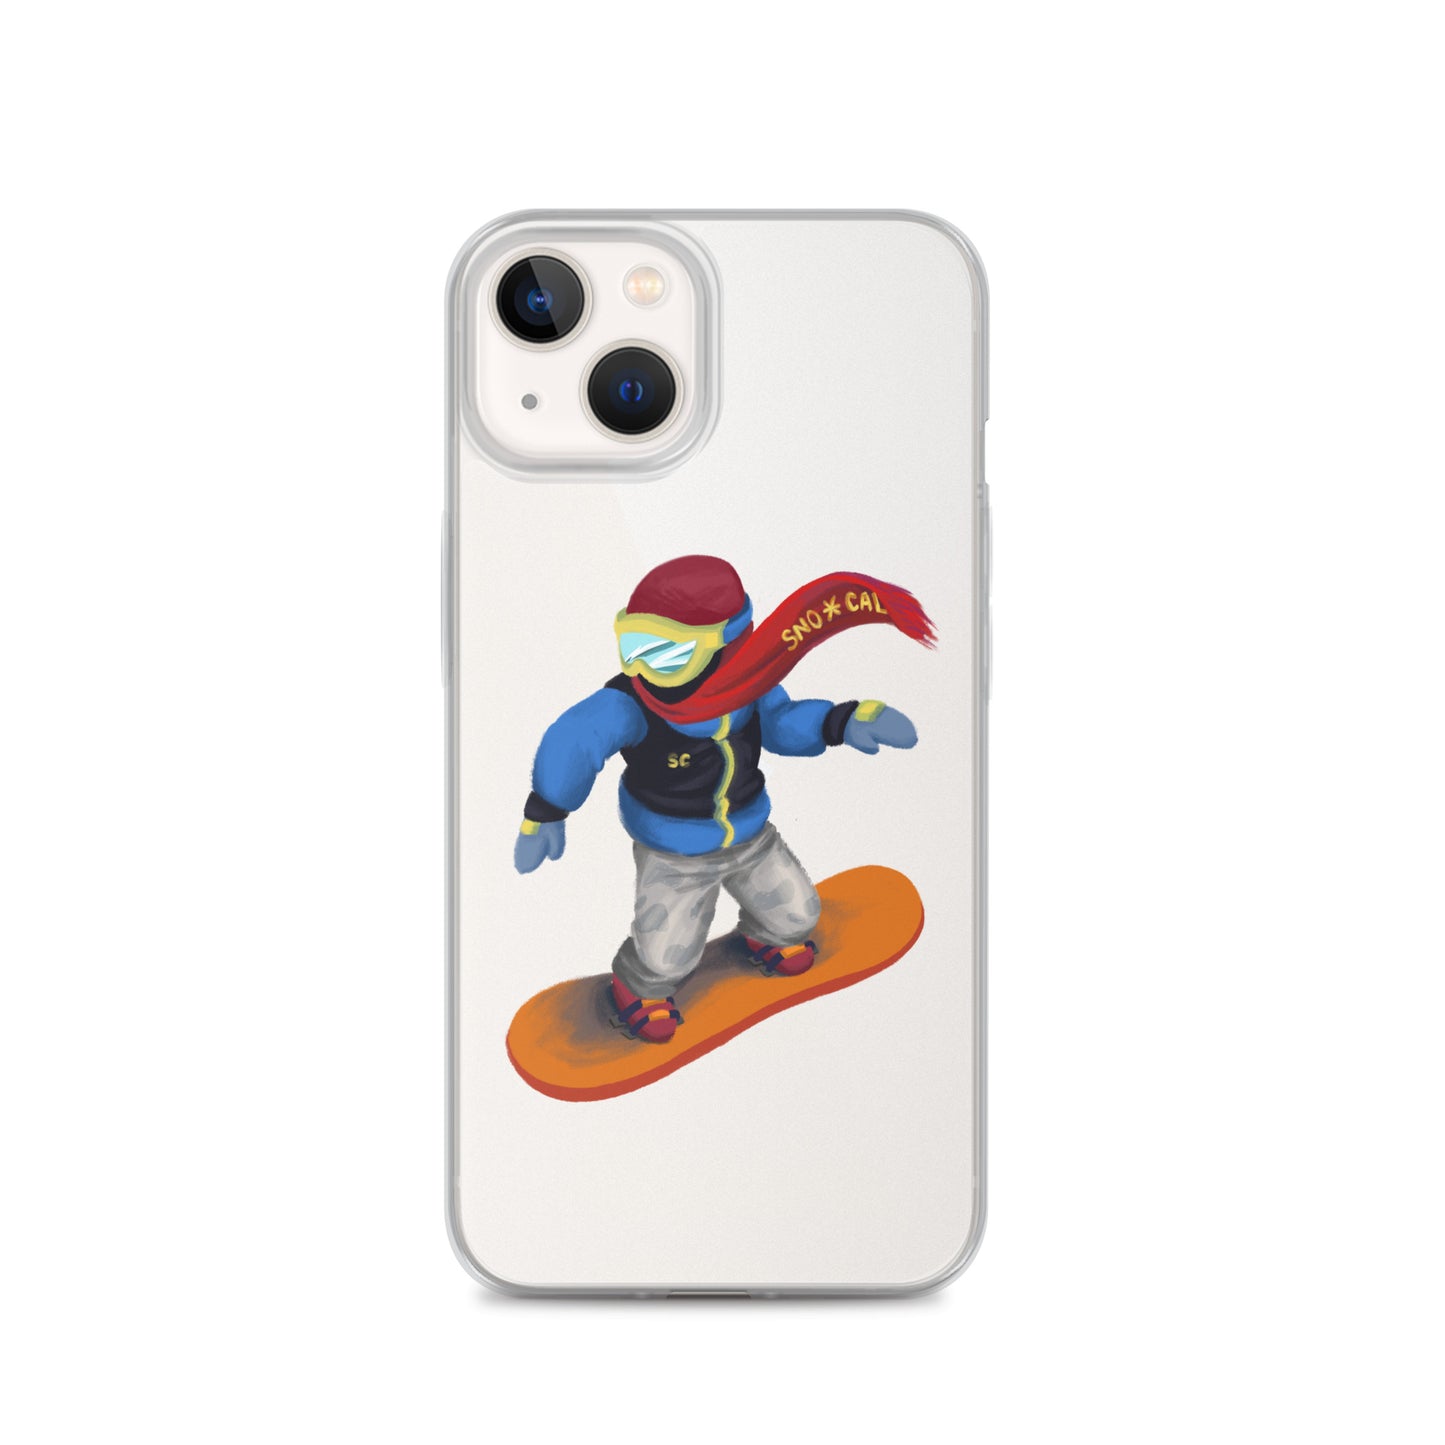 Snowboard Emoji Clear Case for iPhone®